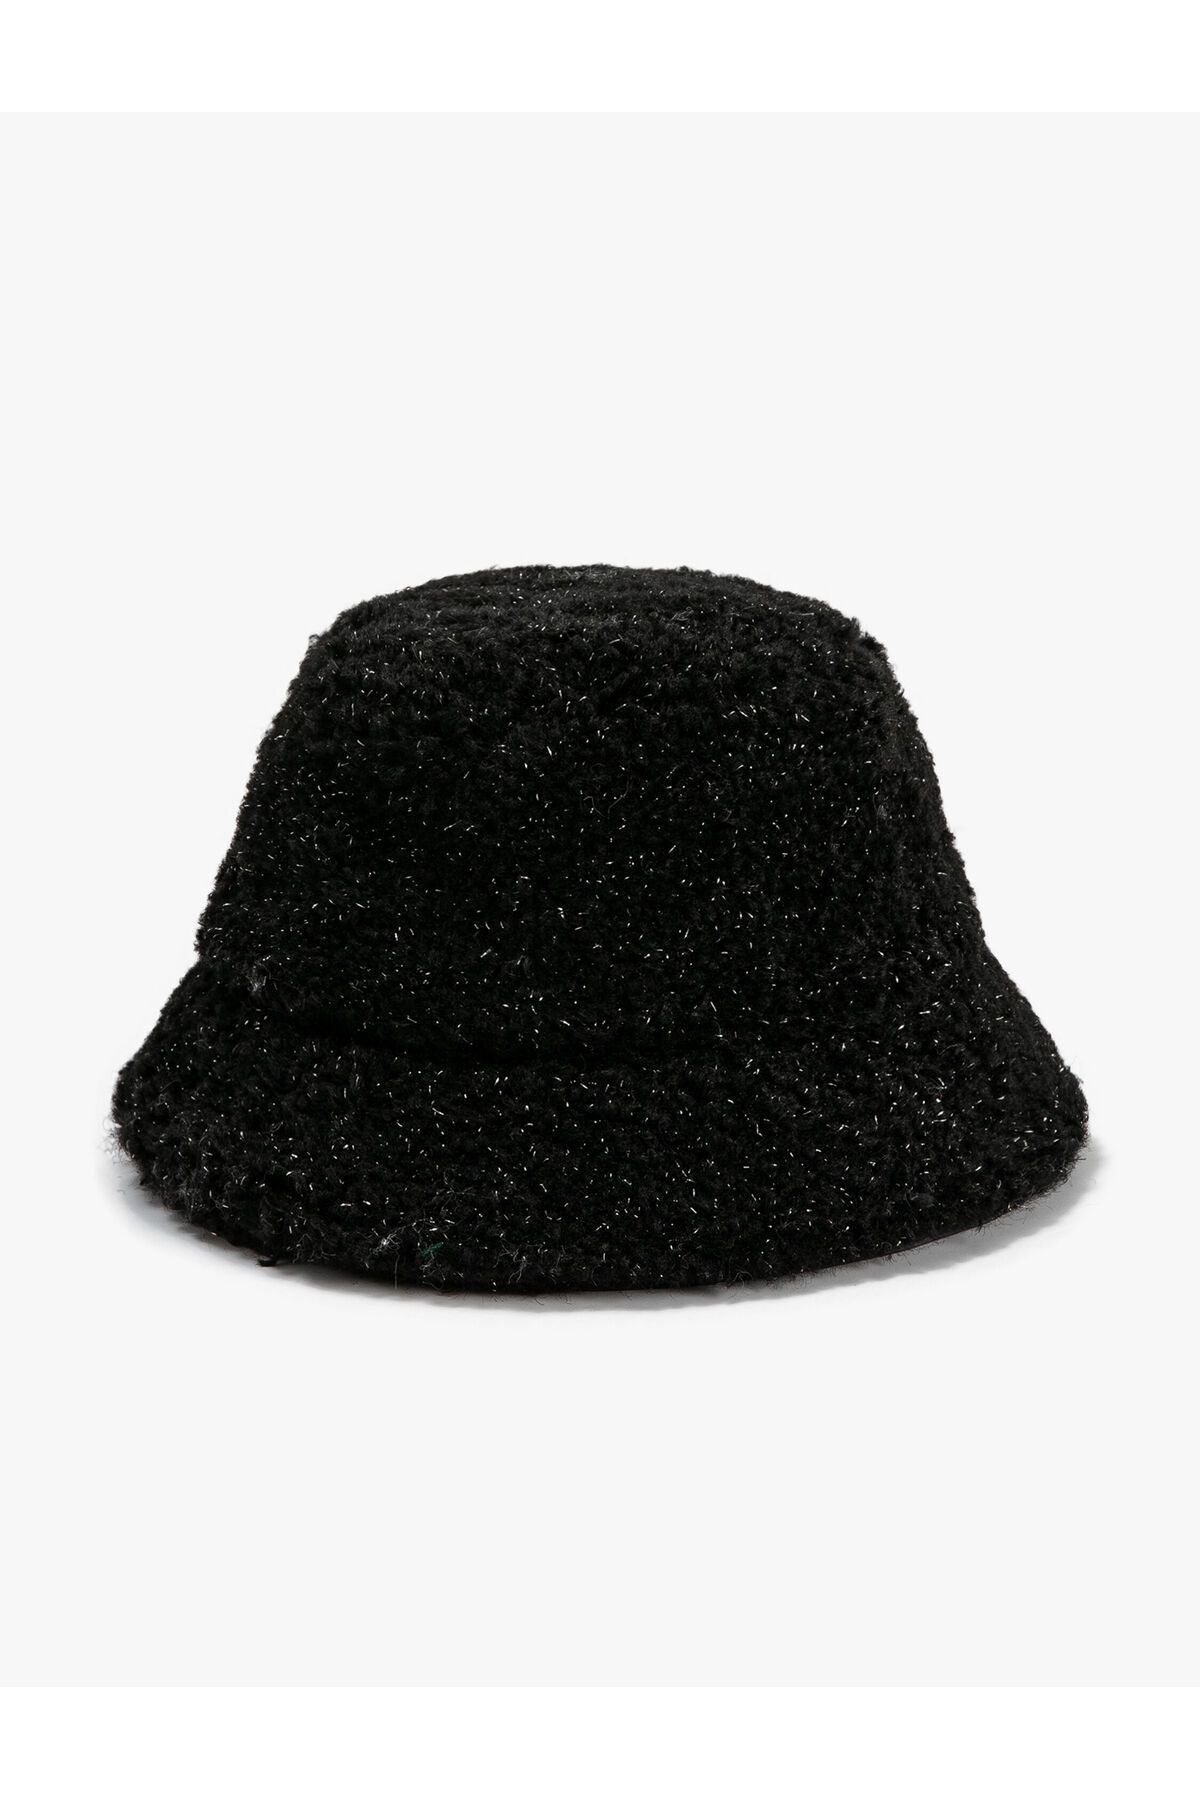 Koton Peluş Bucket Şapka